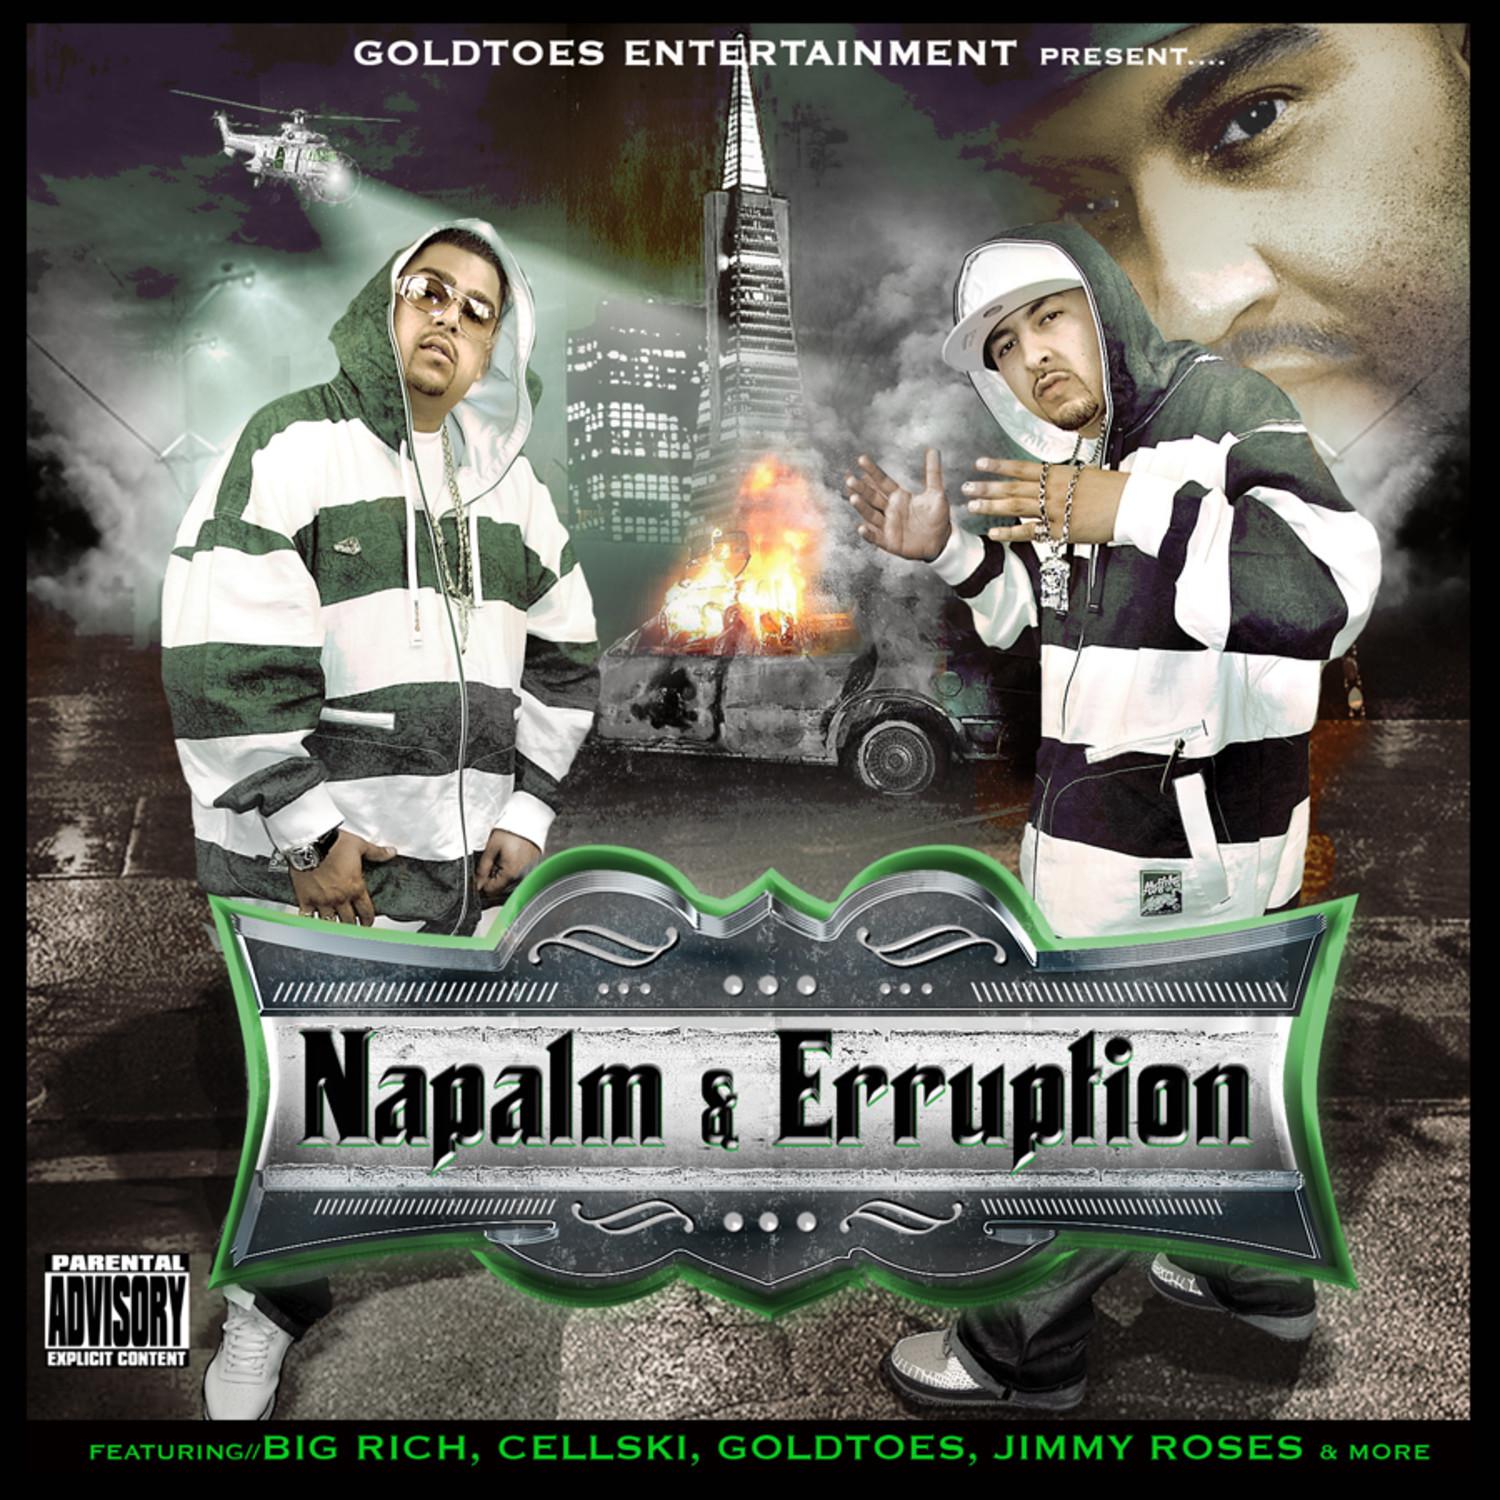 Goldtoes Entertainment Presents Naypalm & Erruption